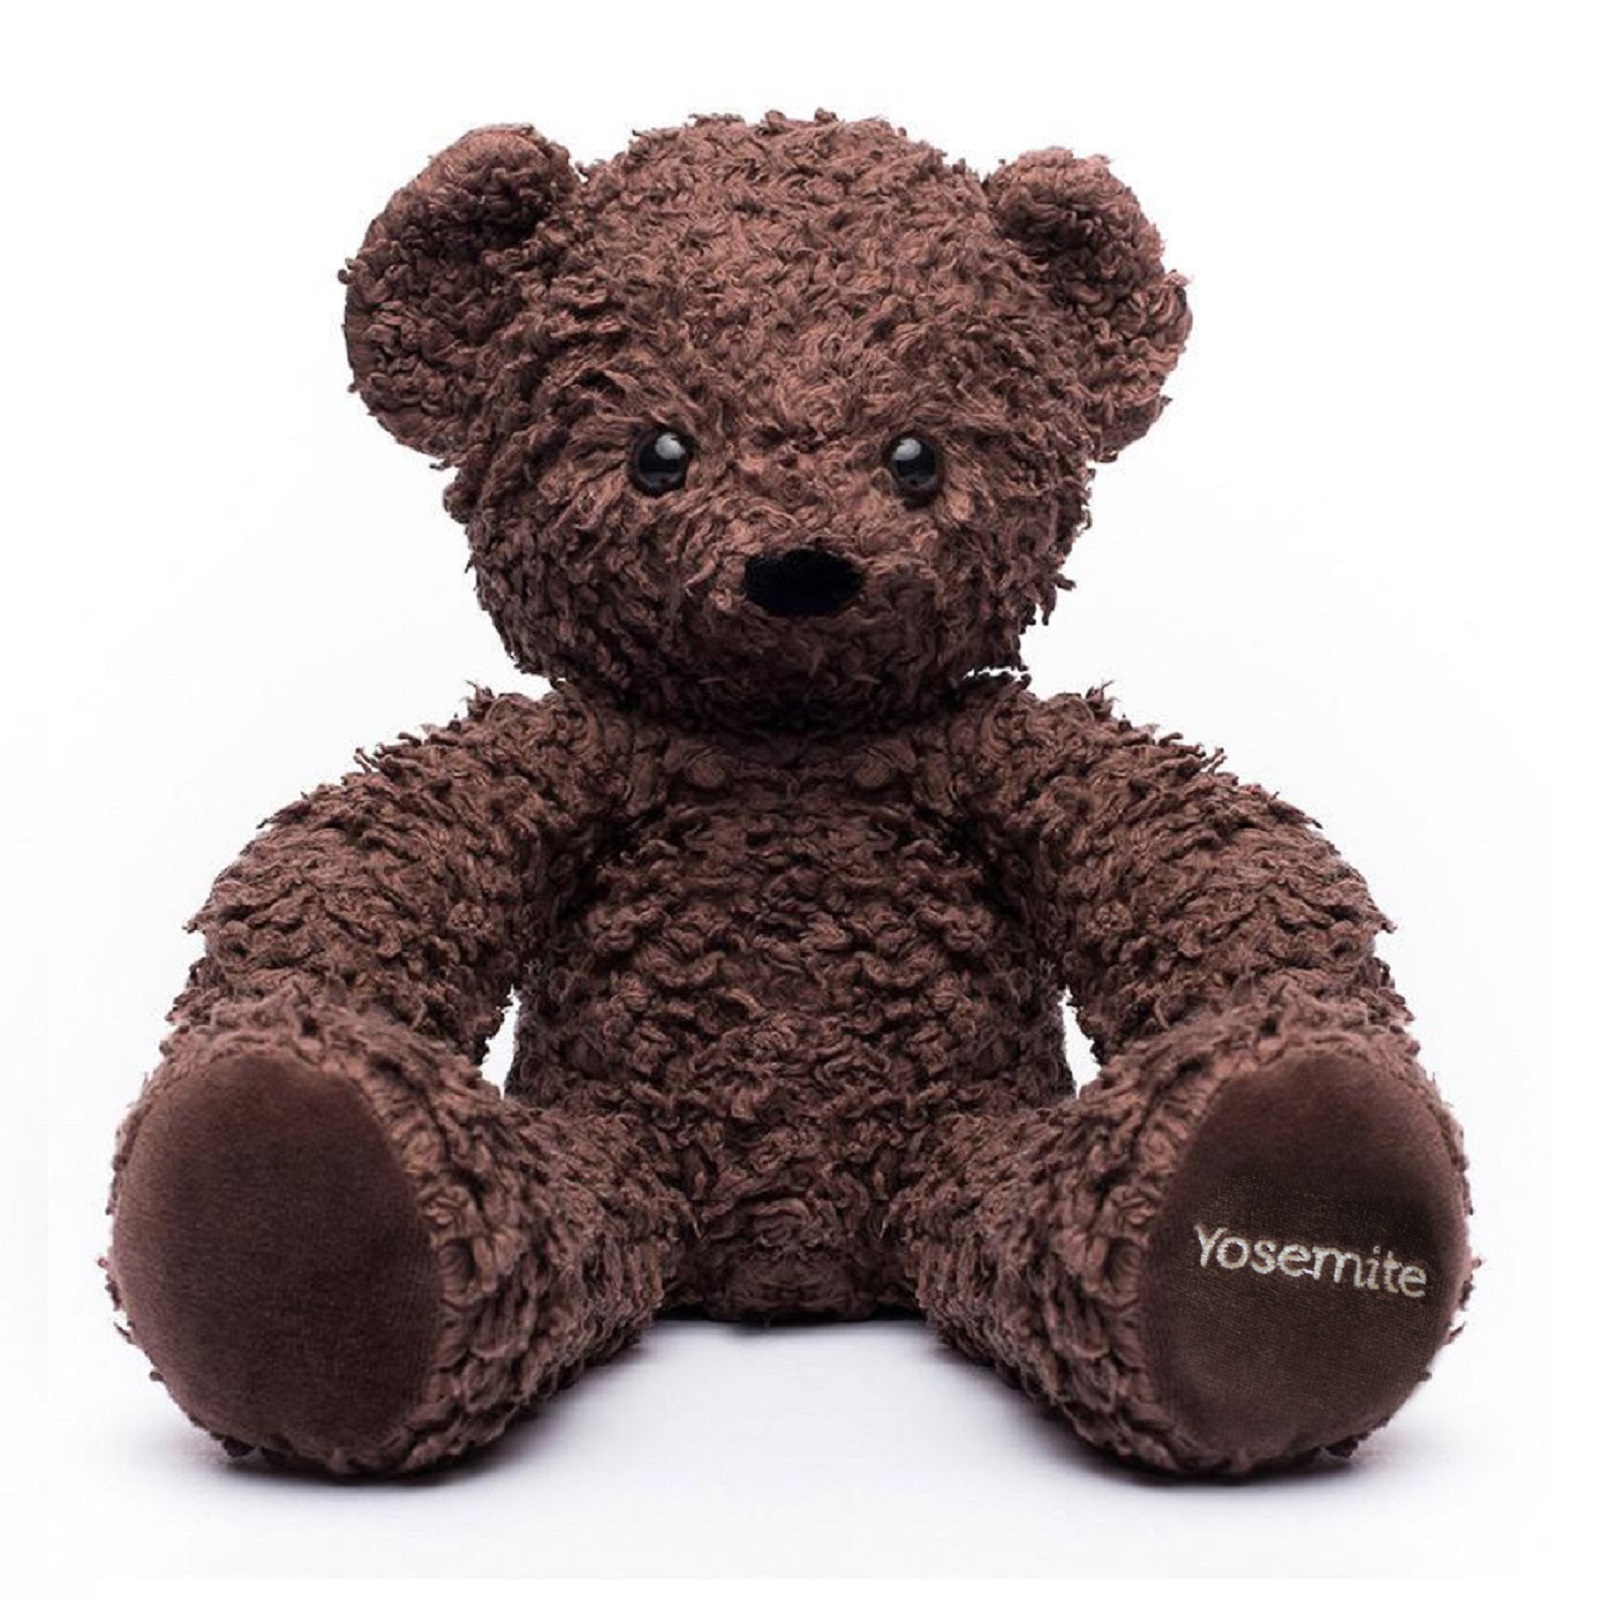 Yosemite Teddy Bear - Brown - Yosemite Online Store - Official ...